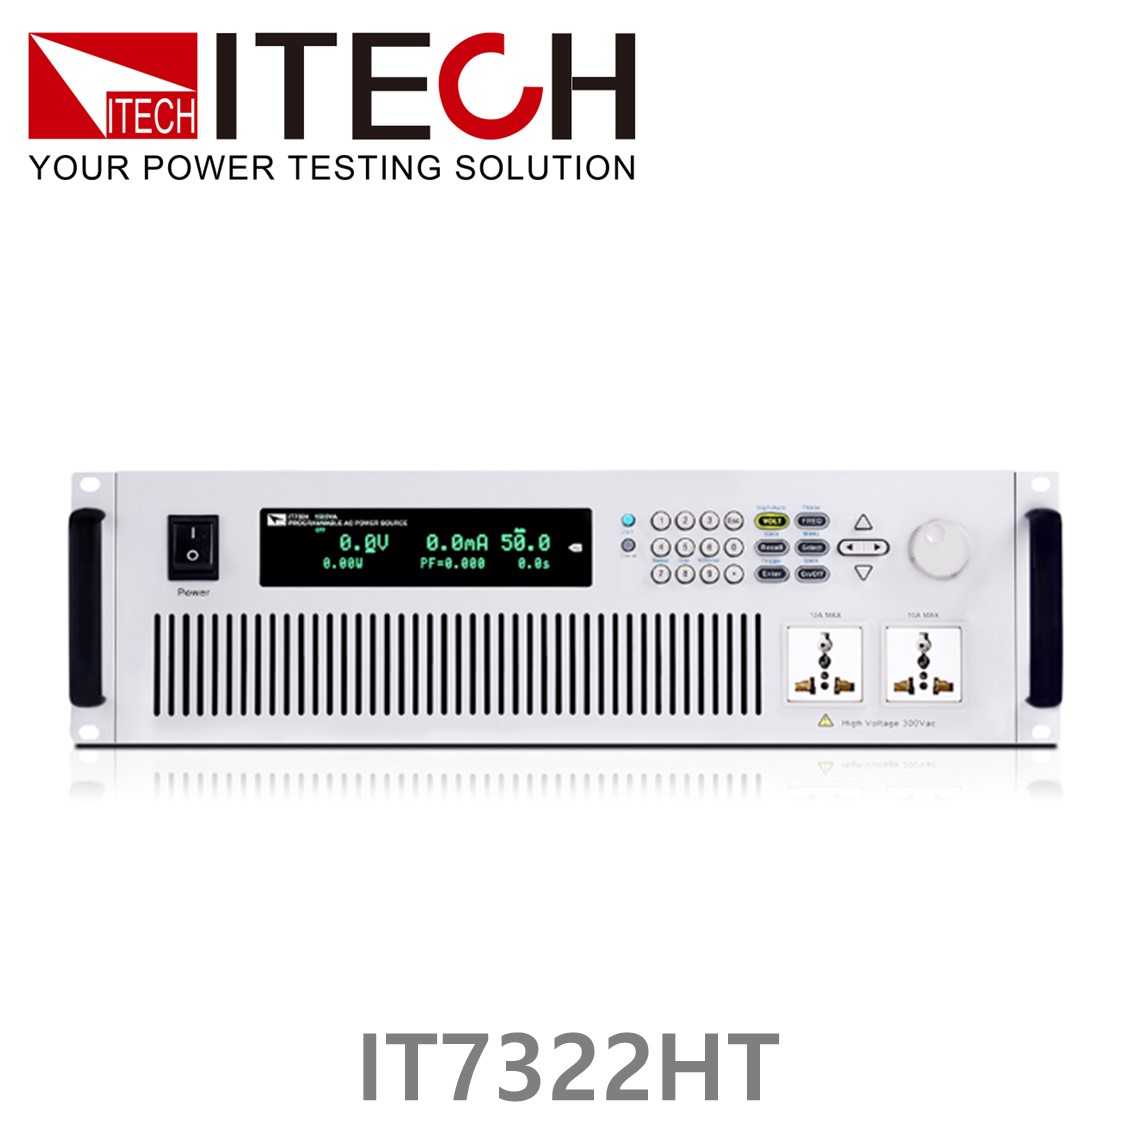 [ ITECH ] IT7322HT  리니어 프로그래머블 AC전원공급기 250V/500V - 3A/1.5A - 2250VA (3φ) (15U)